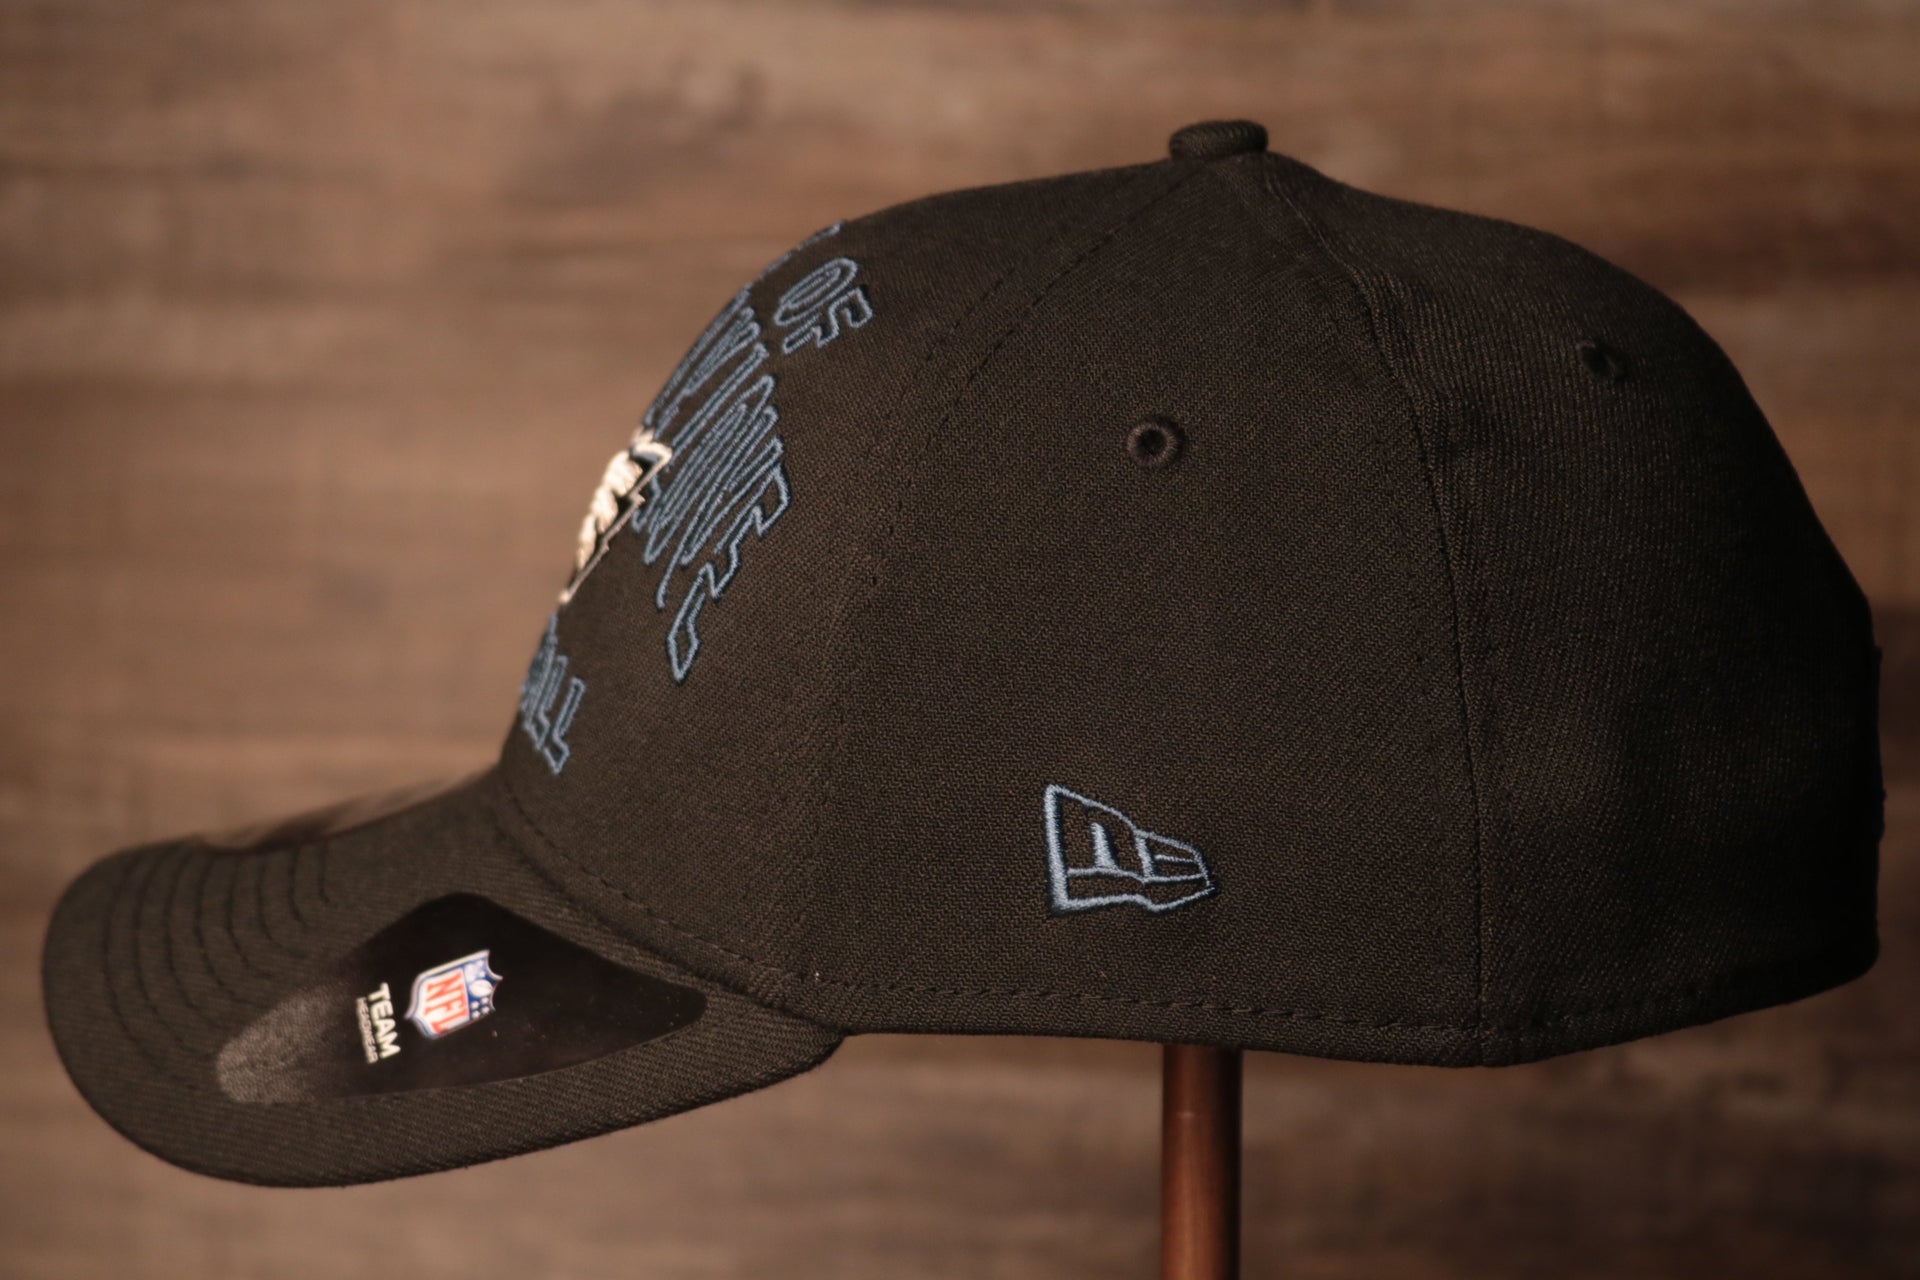 The wearers left side has the new era logo Eagles 2020 Draft Flexfit Hat | Philadelphia Eagles Alternate Draft Stretch Cap